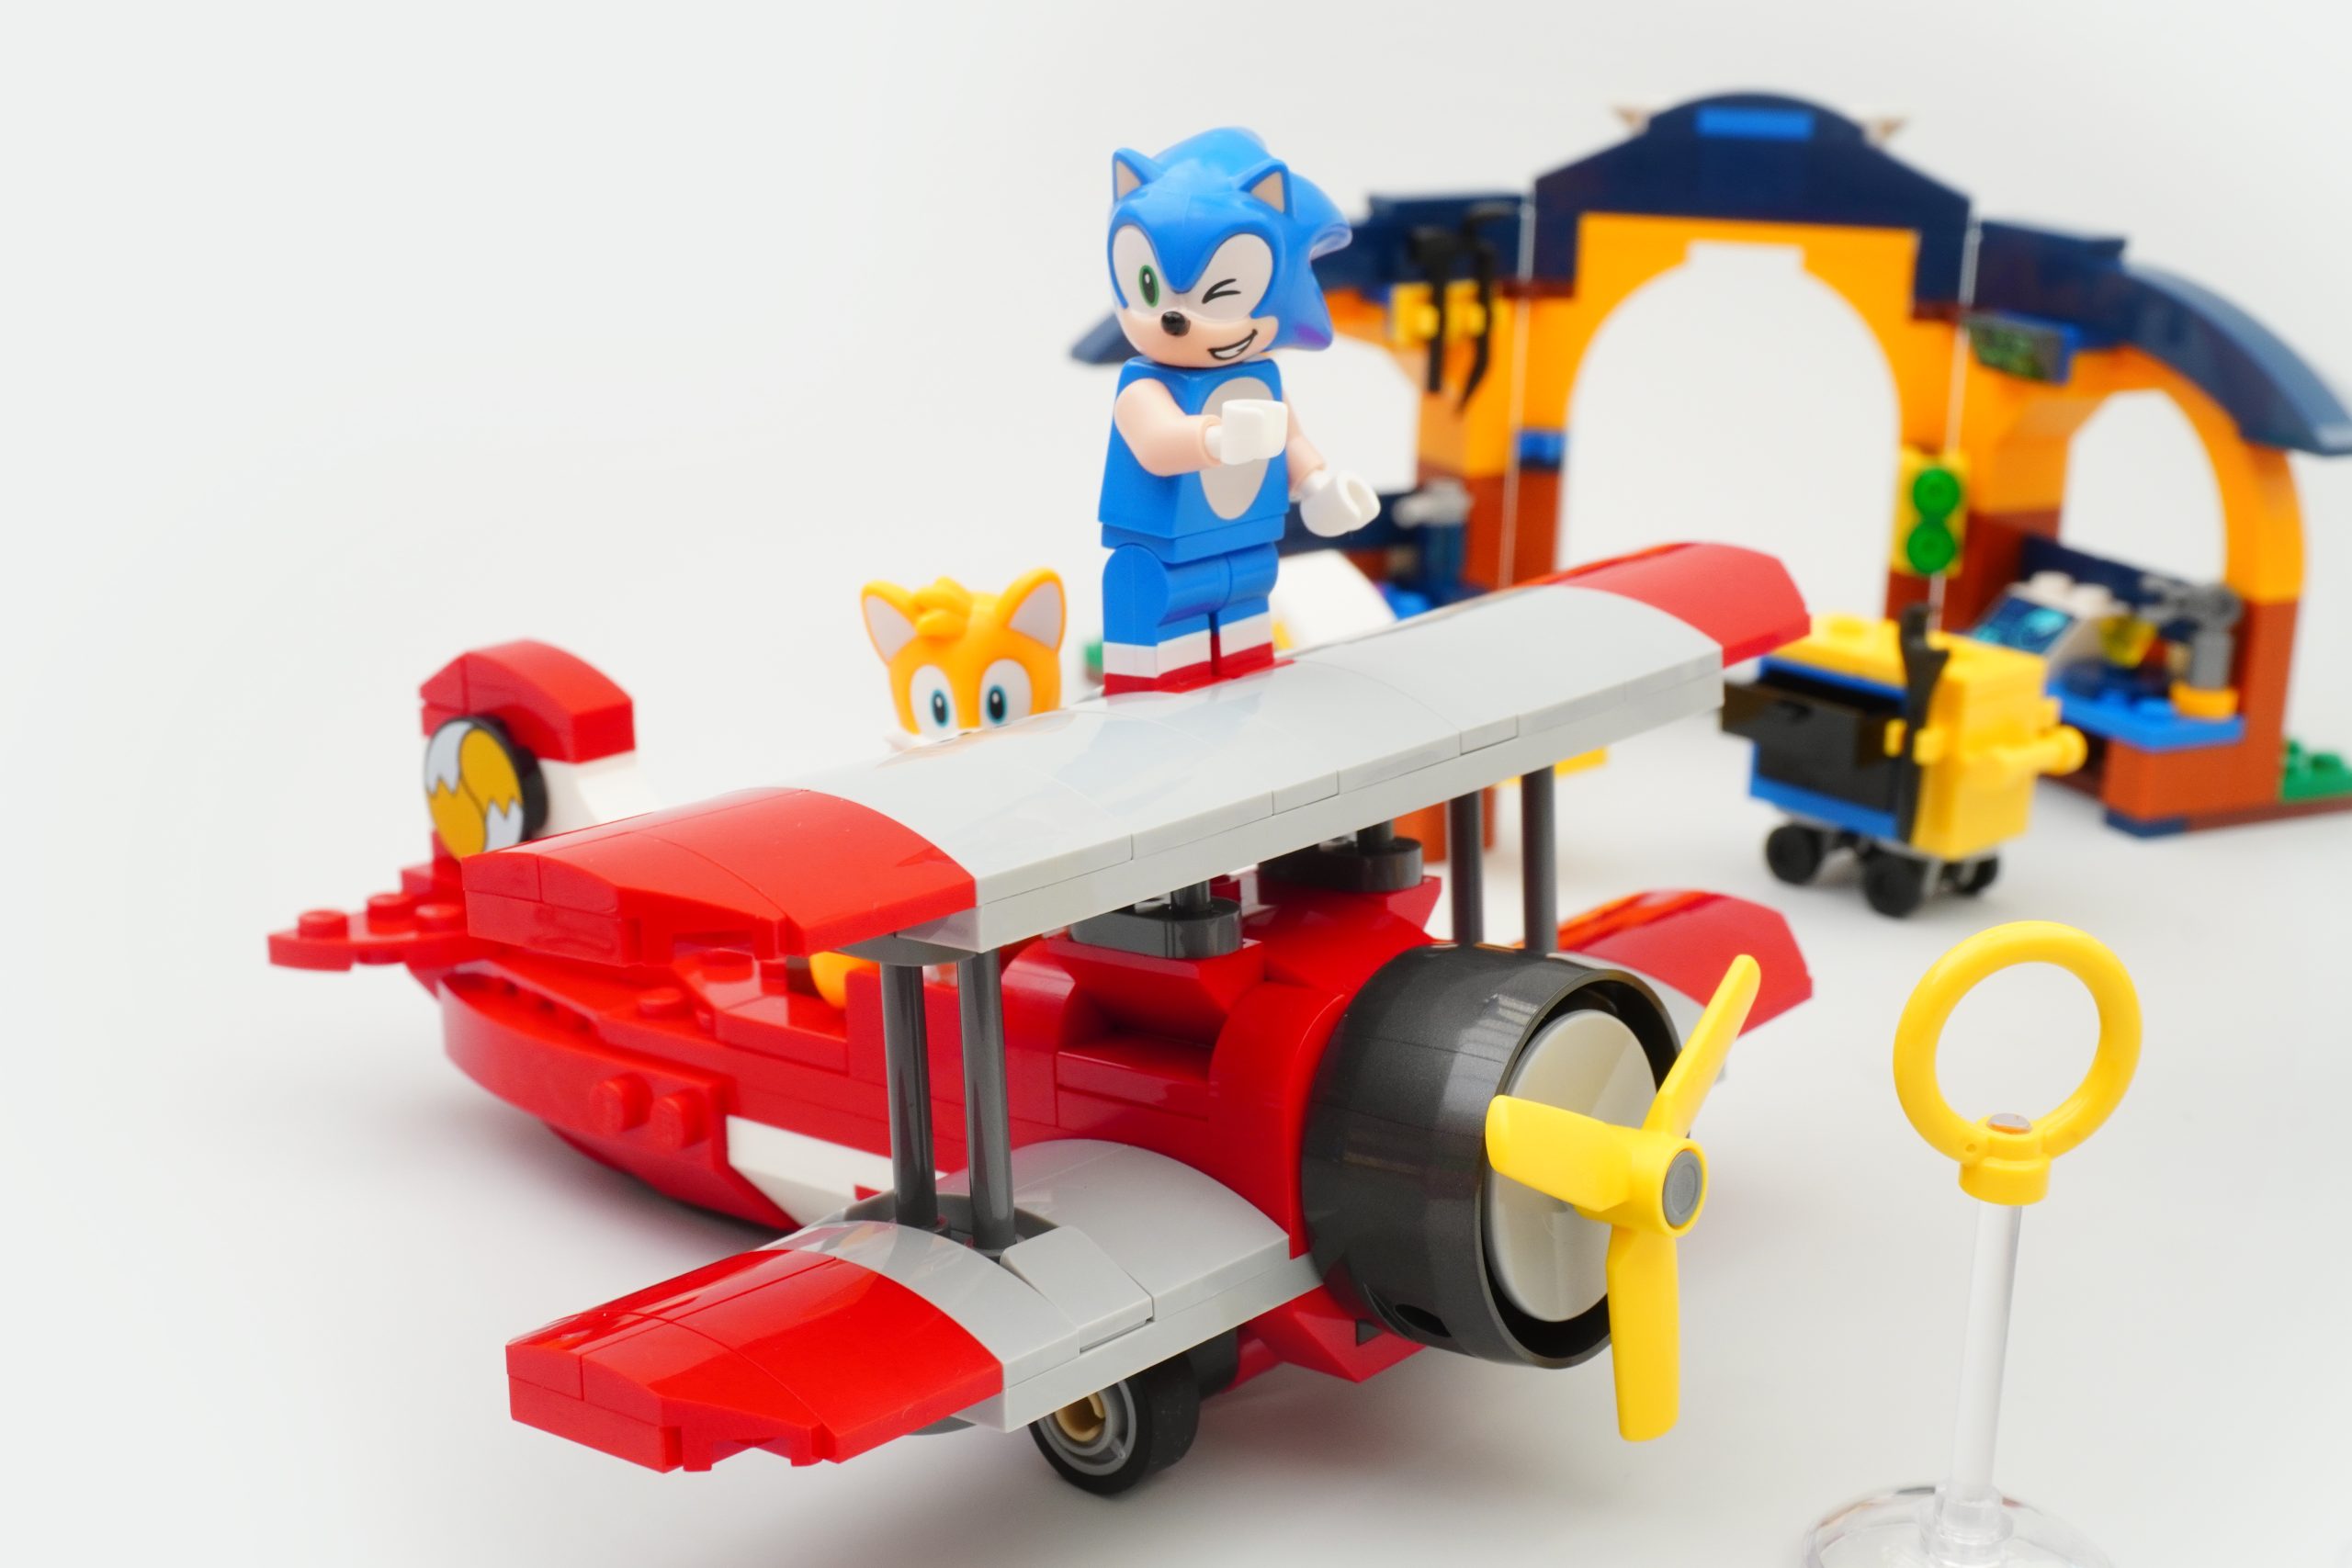 Tails' Workshop and Tornado Plane 76991, LEGO® Sonic the Hedgehog™